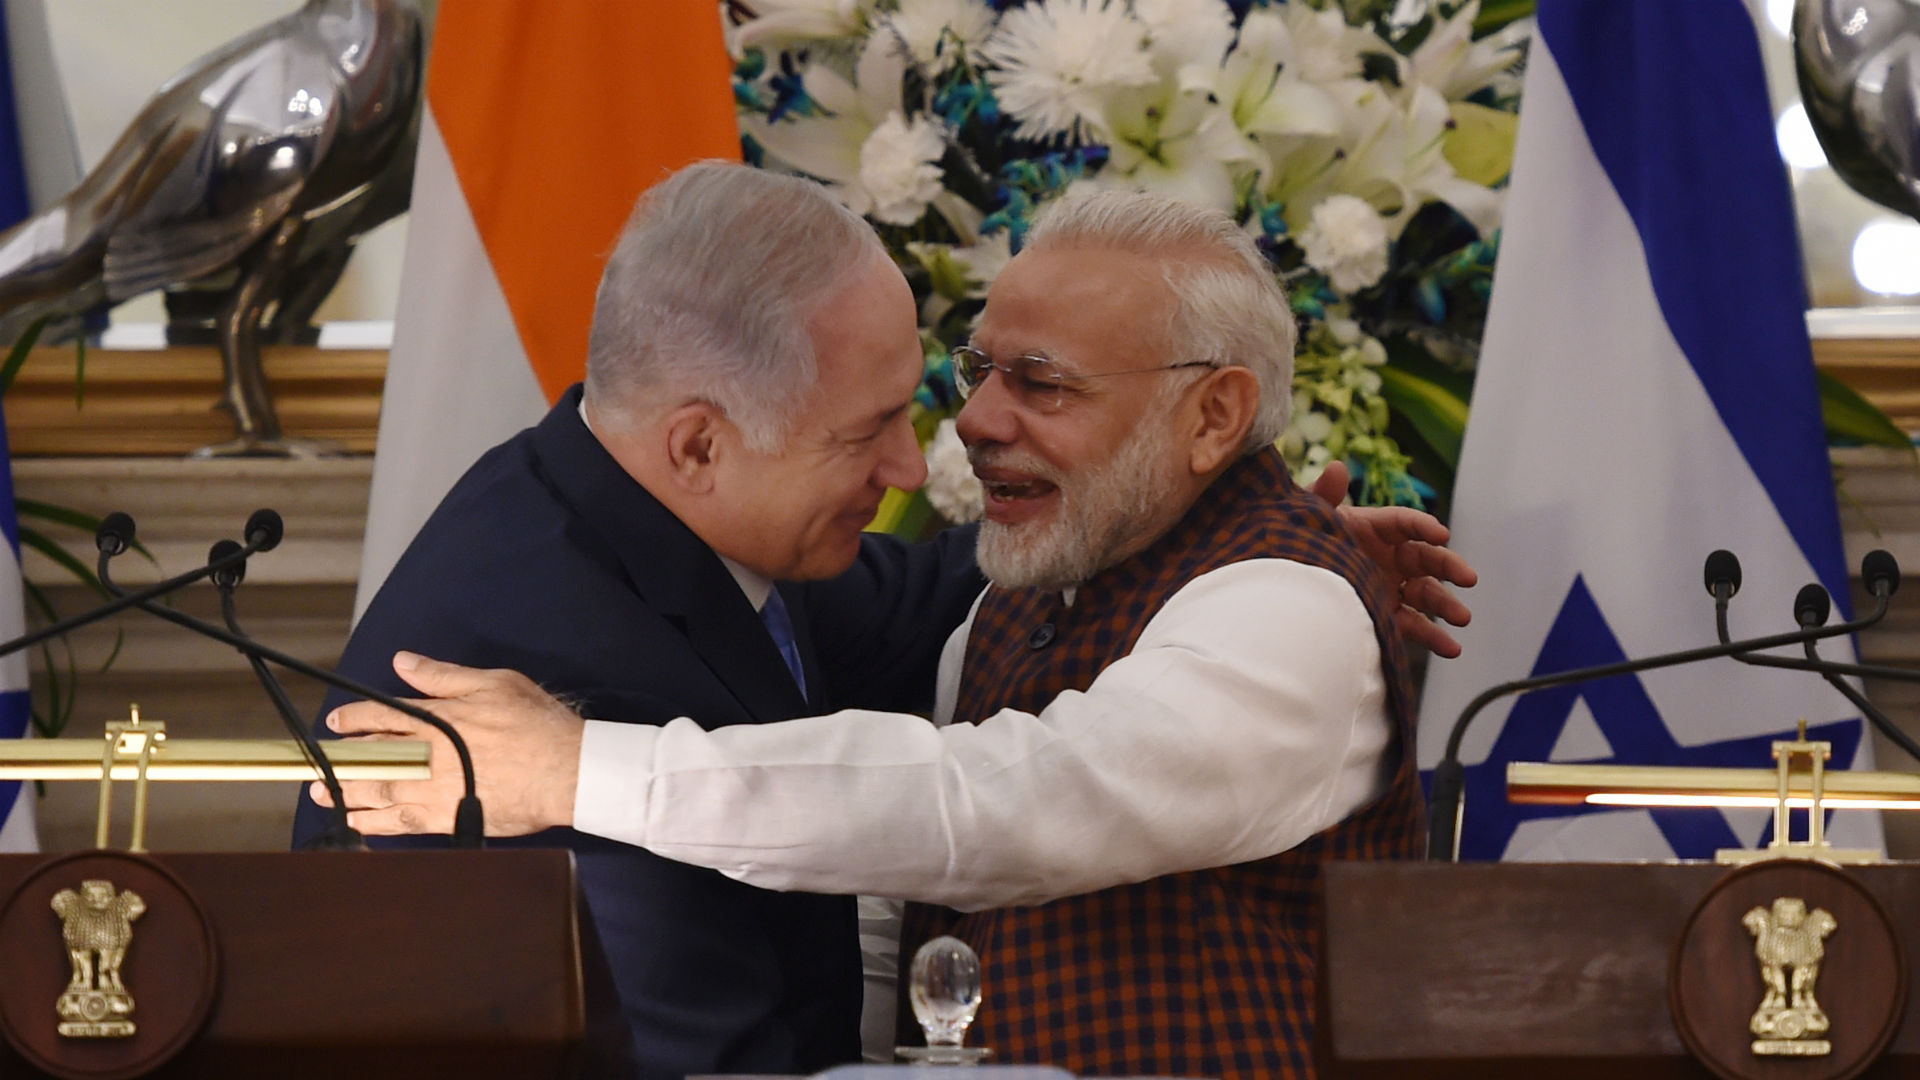 Netanyahu praises victory of pro-Israel India PM Narendra Modi